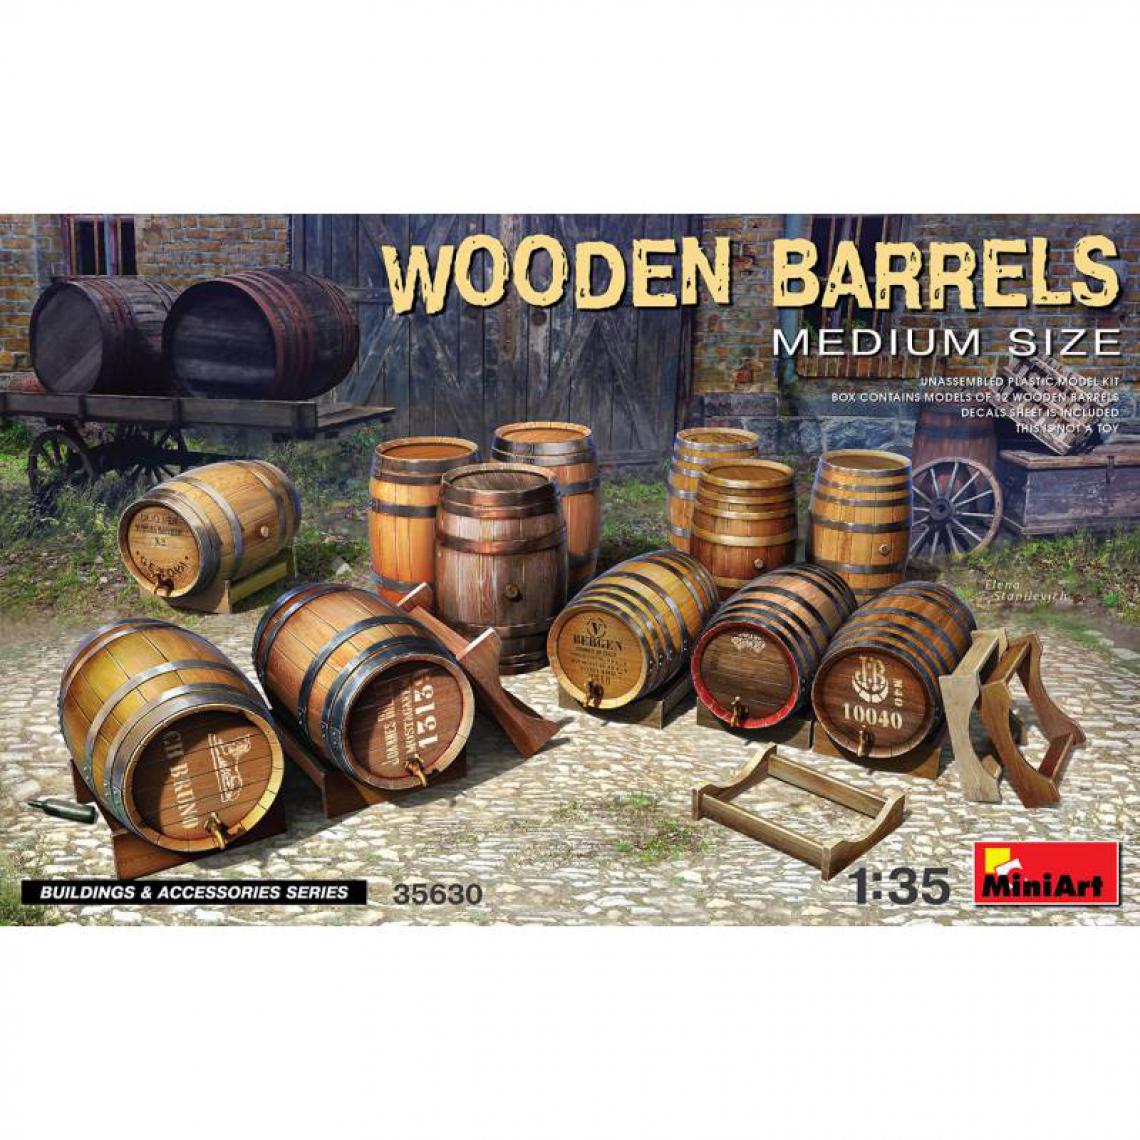 Mini Art - Wooden Barrels Medium Size - Décor Modélisme - Accessoires maquettes